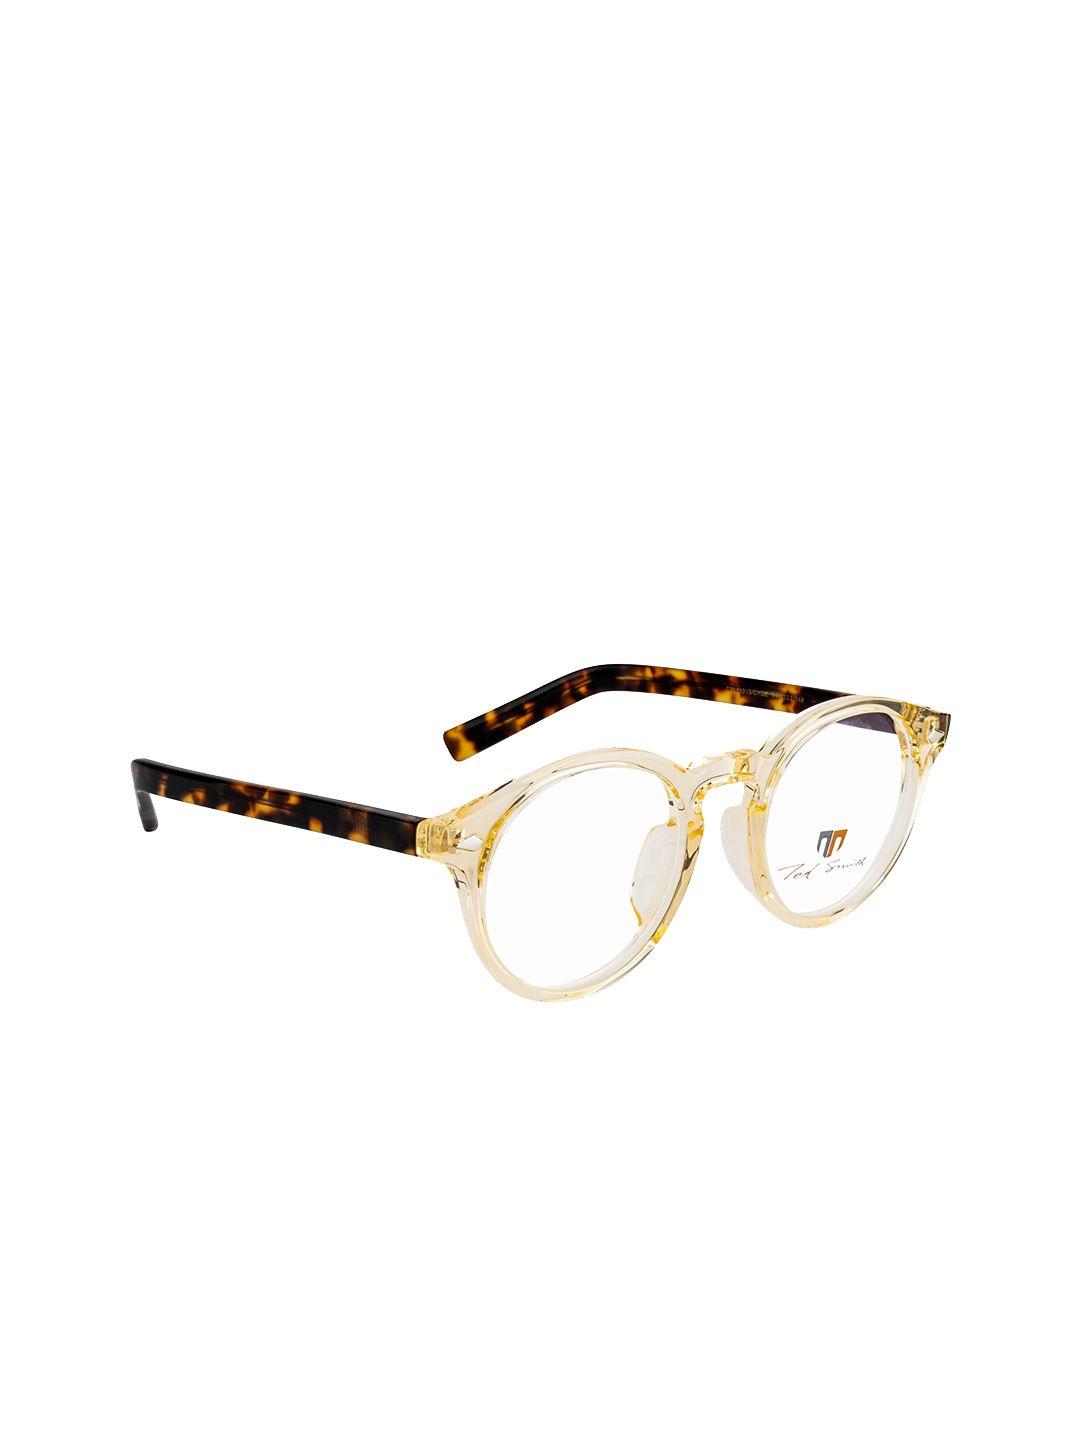 ted smith unisex orange & black tortoise shell full rim round frame ts-11013_orgframes eyeglasses